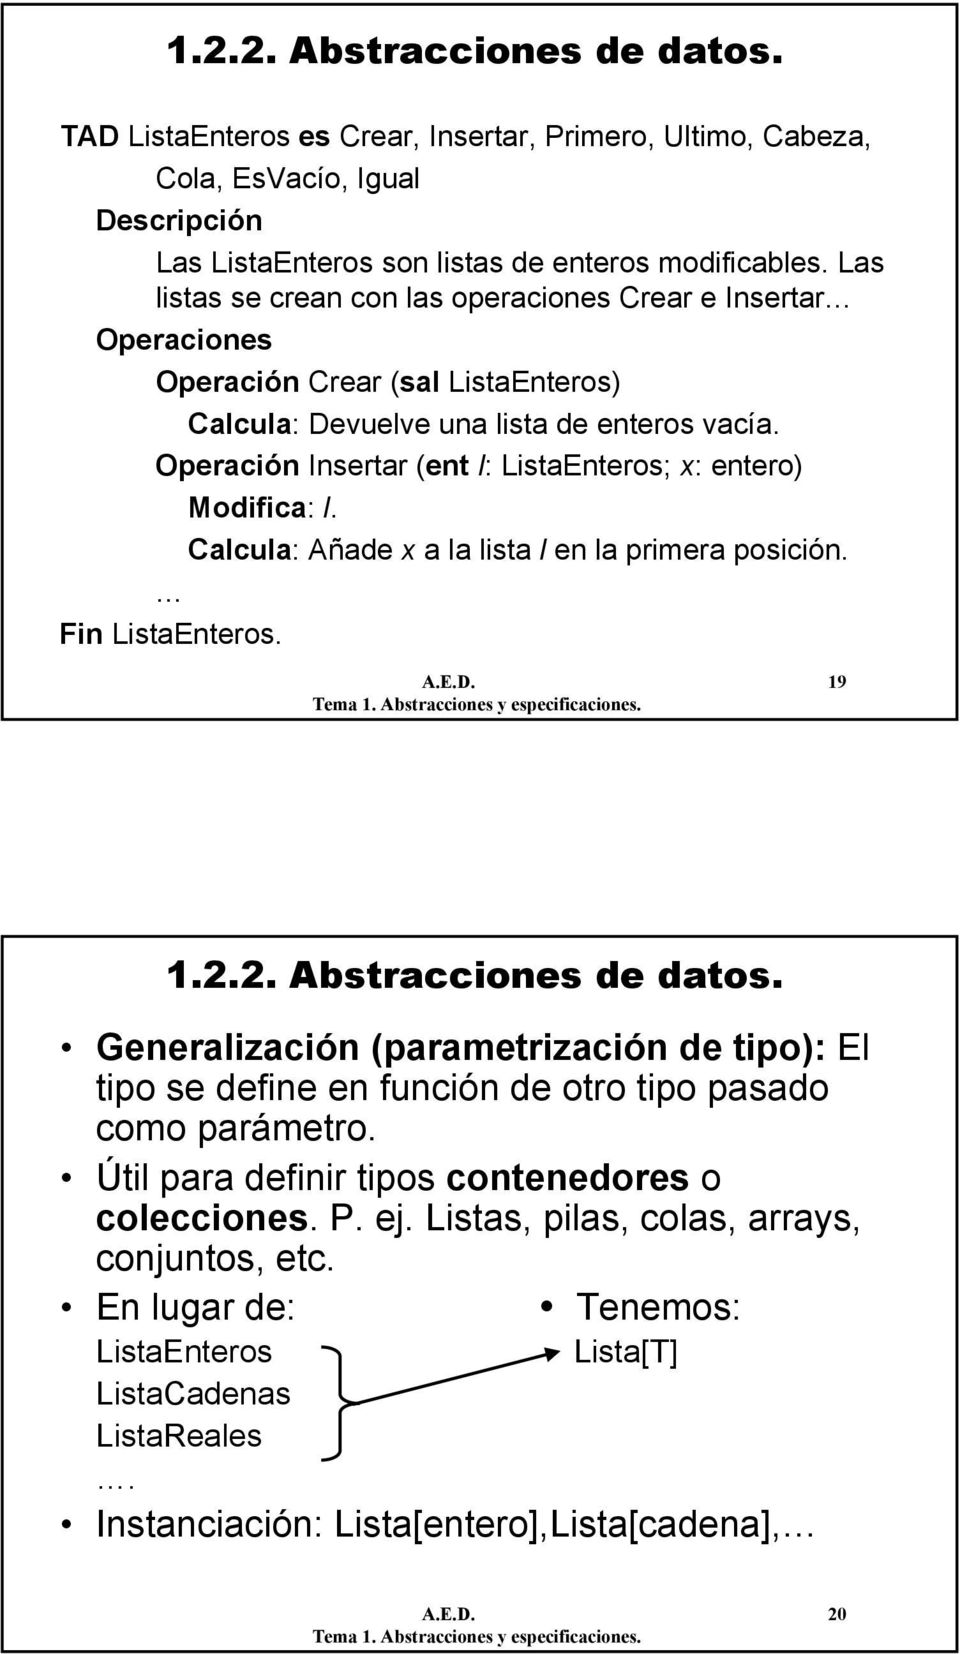 Operación Insertar (ent l: ListaEnteros; x: entero) Modifica: l. Calcula: Añade x a la lista l en la primera posición. Fin ListaEnteros. A.E.D. 19 1.2.2. Abstracciones de datos.